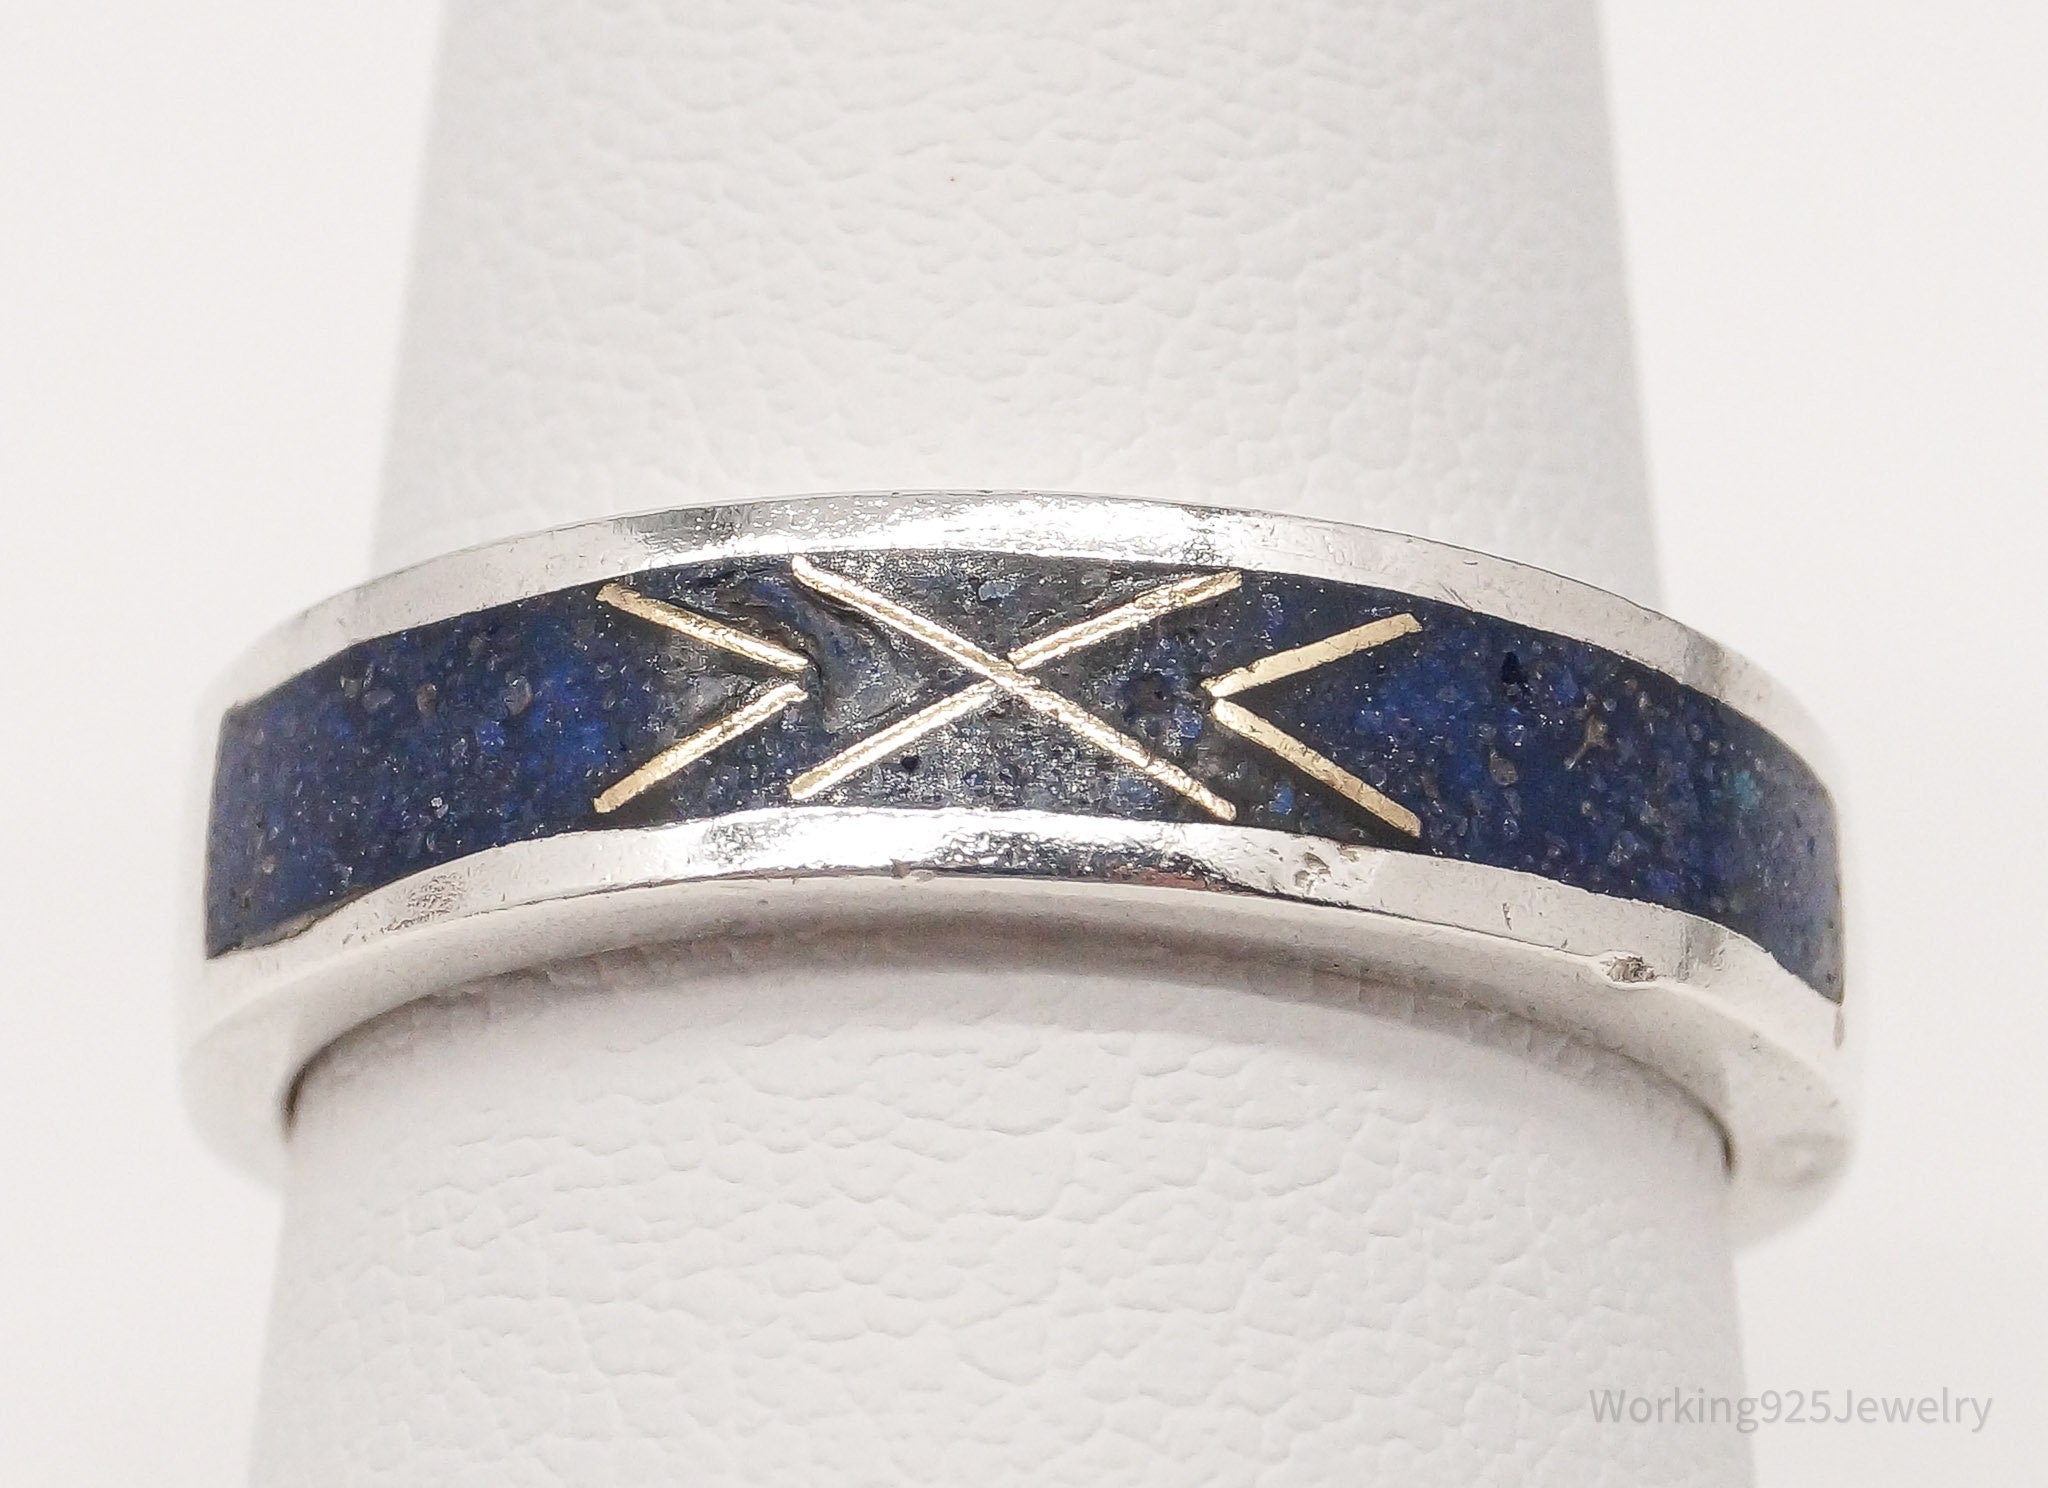 Vintage Native American Lapis Lazuli Inlay Gold Silver Ring Size 6.75